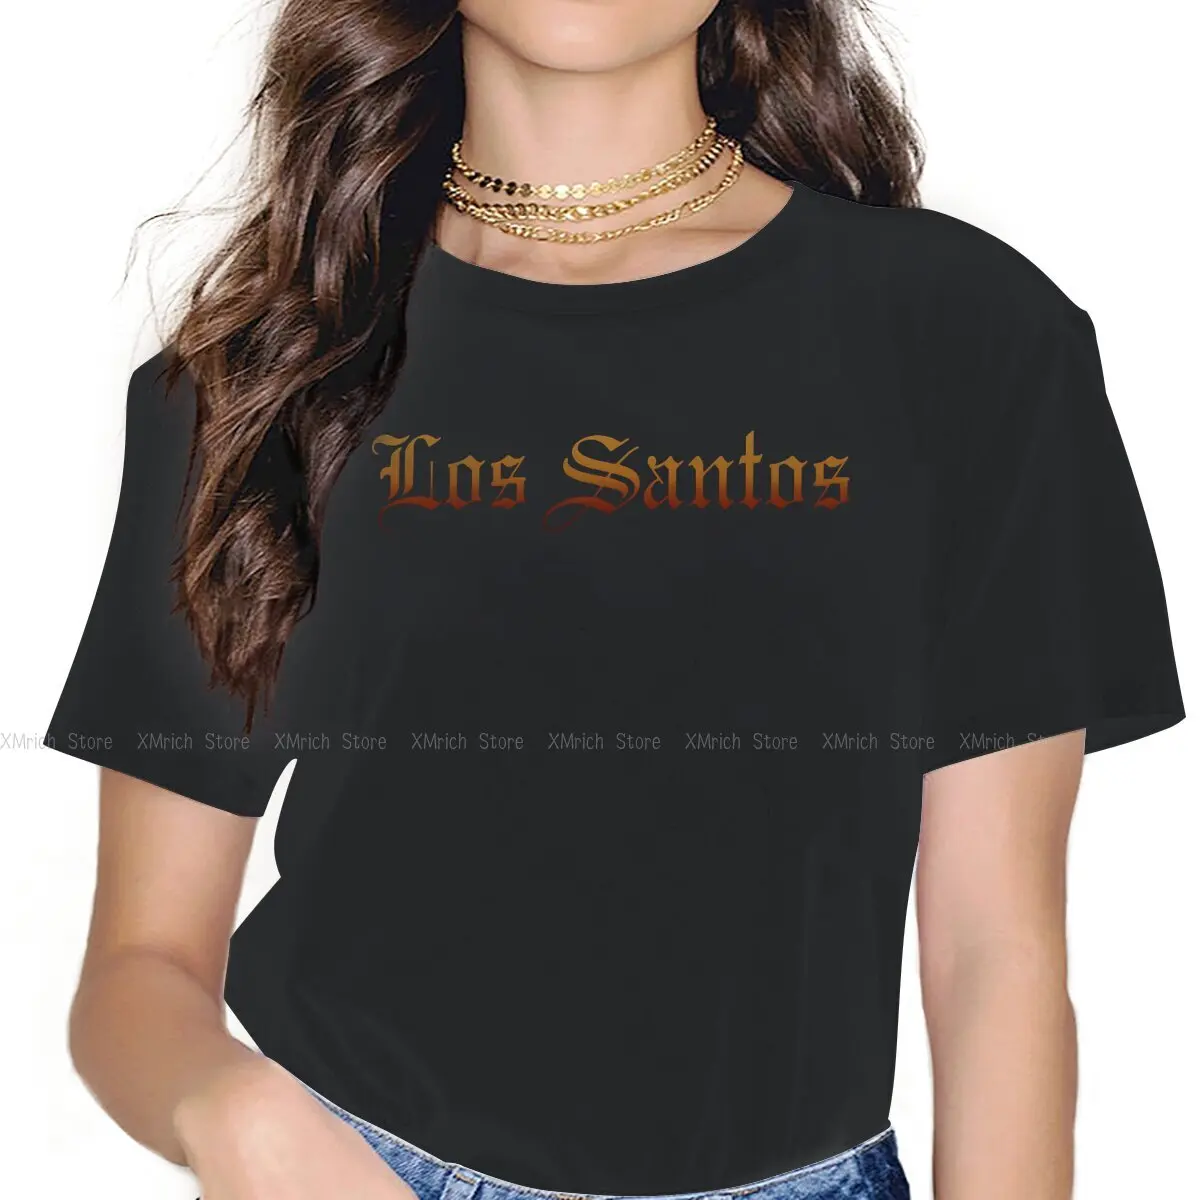 

Women's Los Santos T Shirts GTA Grand Theft Auto Game Cotton Clothing Novelty Short Sleeve Round Neck Tees Gift Idea T-Shirt